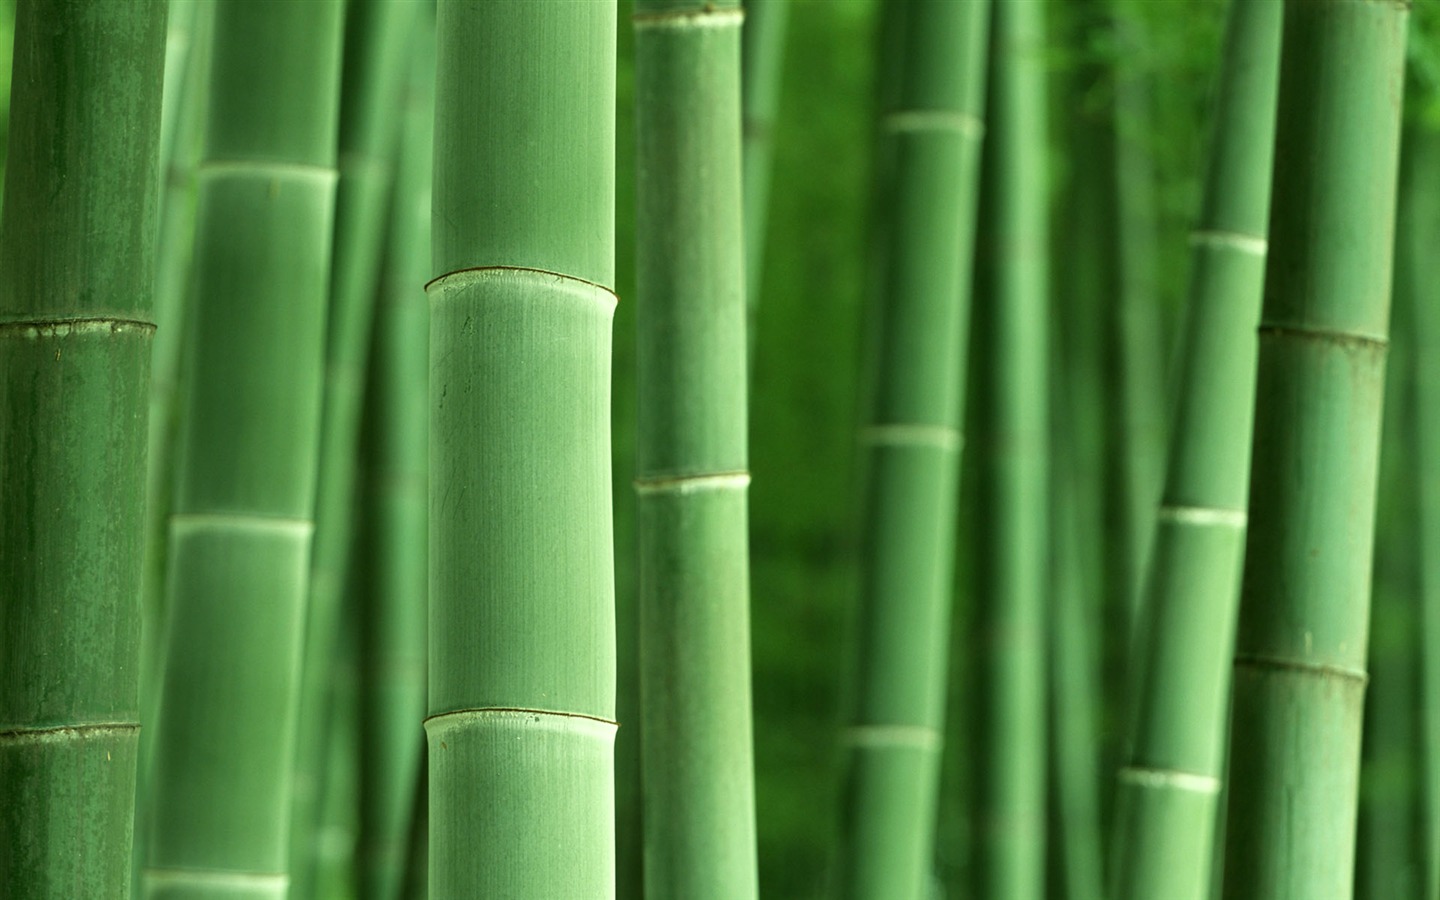 Fond d'écran de bambou vert albums #8 - 1440x900